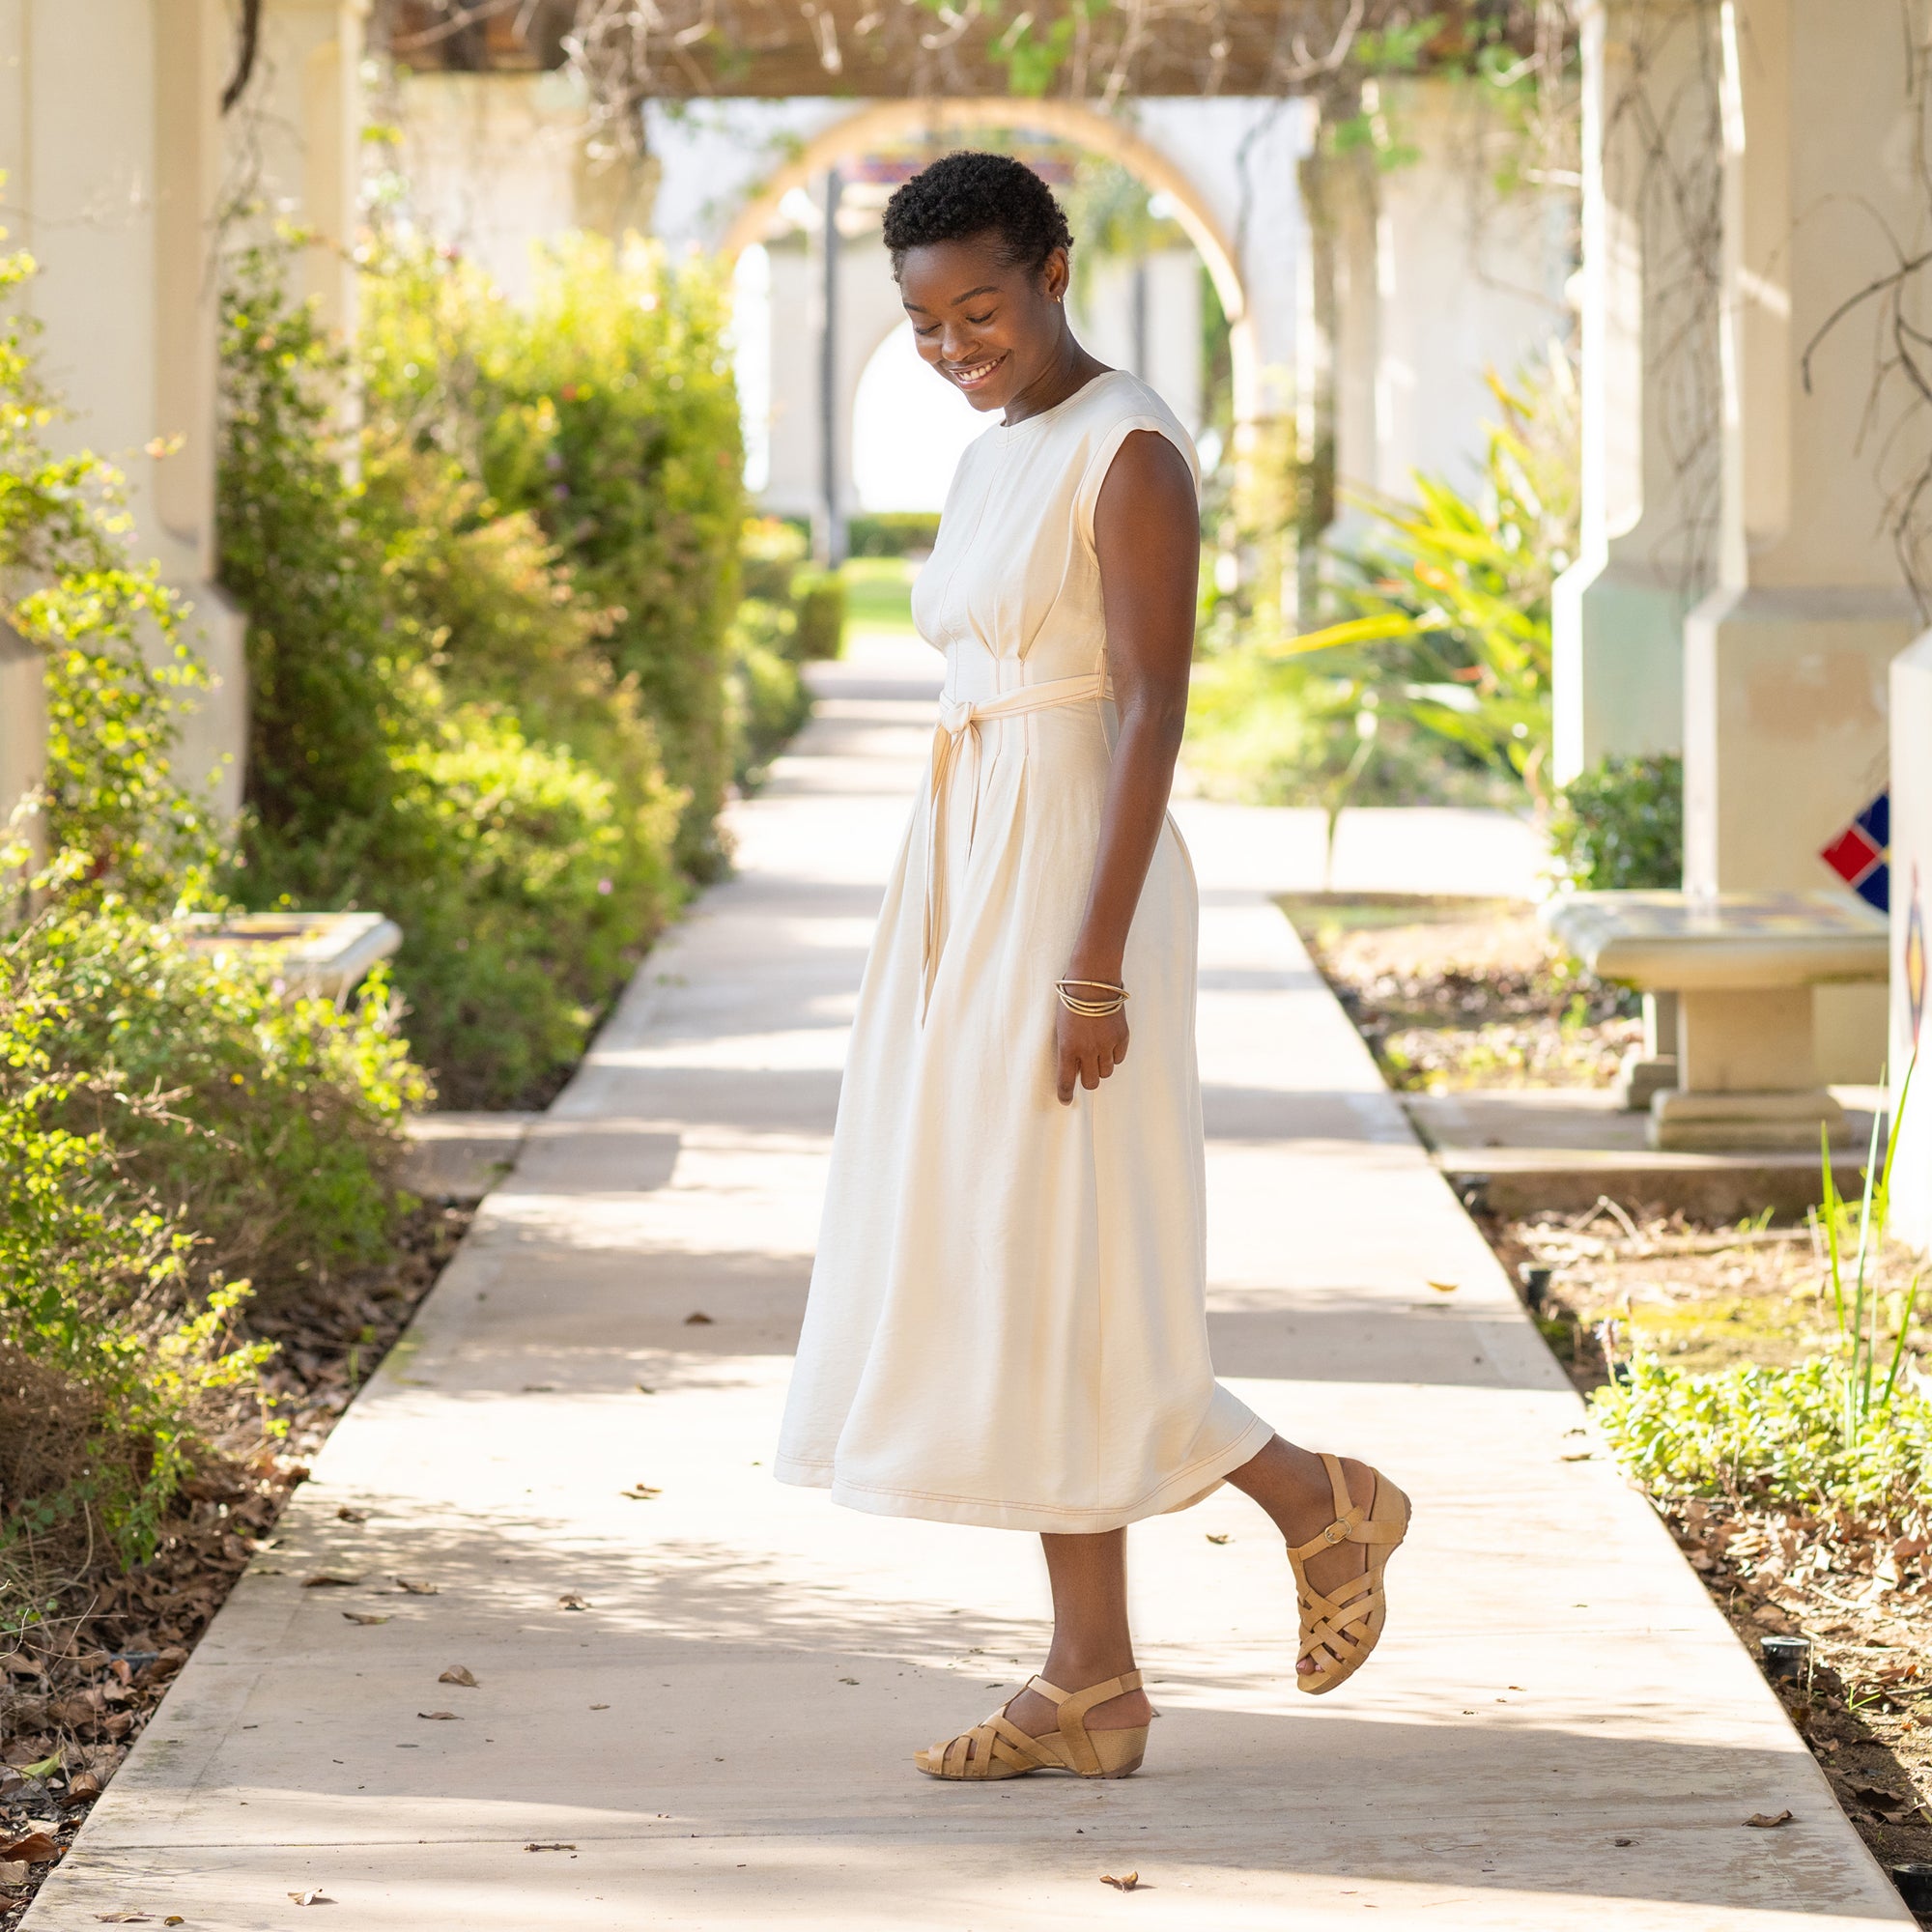 A joyful woman in a flowing white dress standing in a garden and wearing tan fisherman sandals.